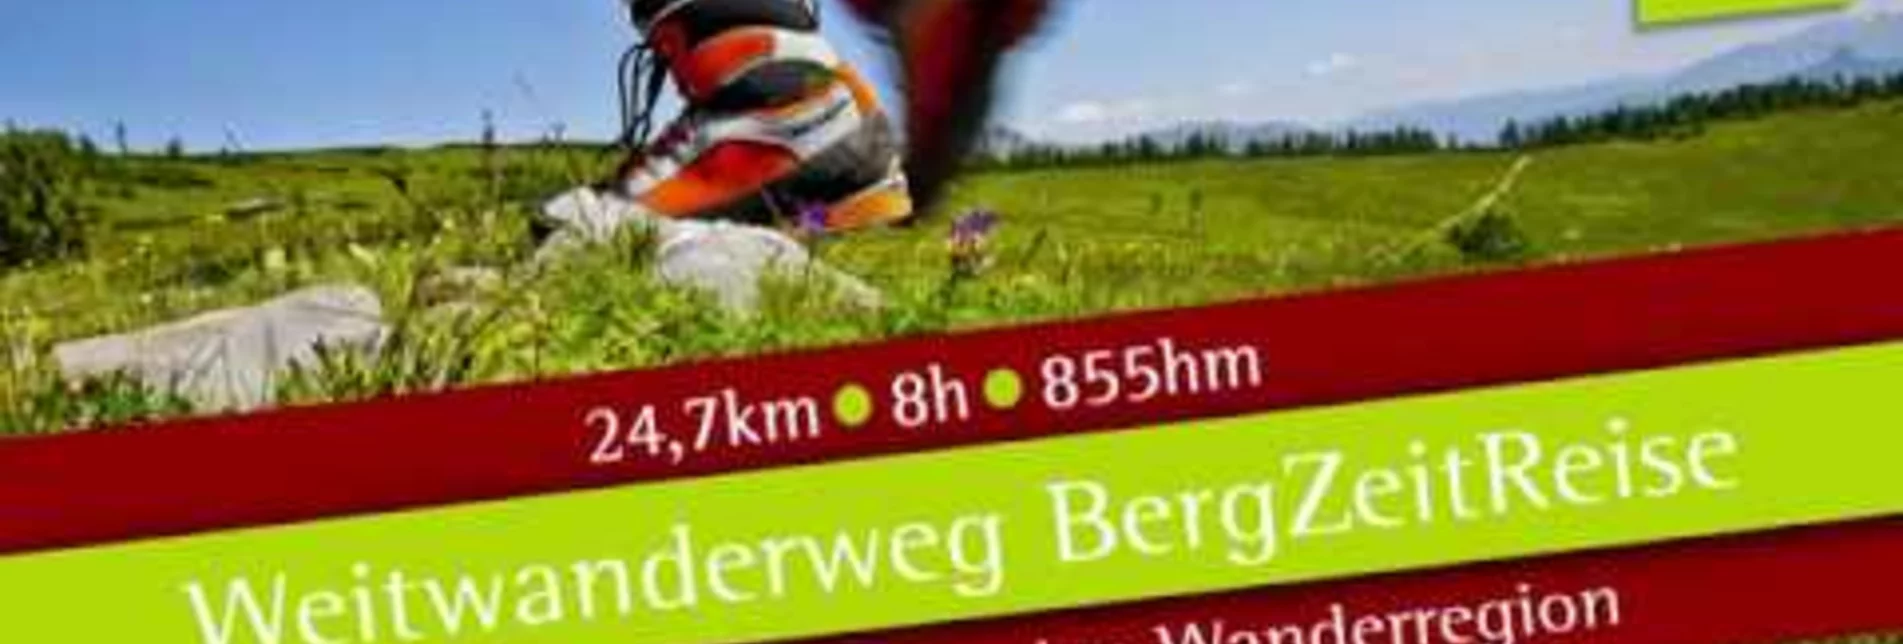 Fernwanderweg Etappe 12: BergZeitReise Kindberg - Pogusch - Kapfenberg - Touren-Impression #1